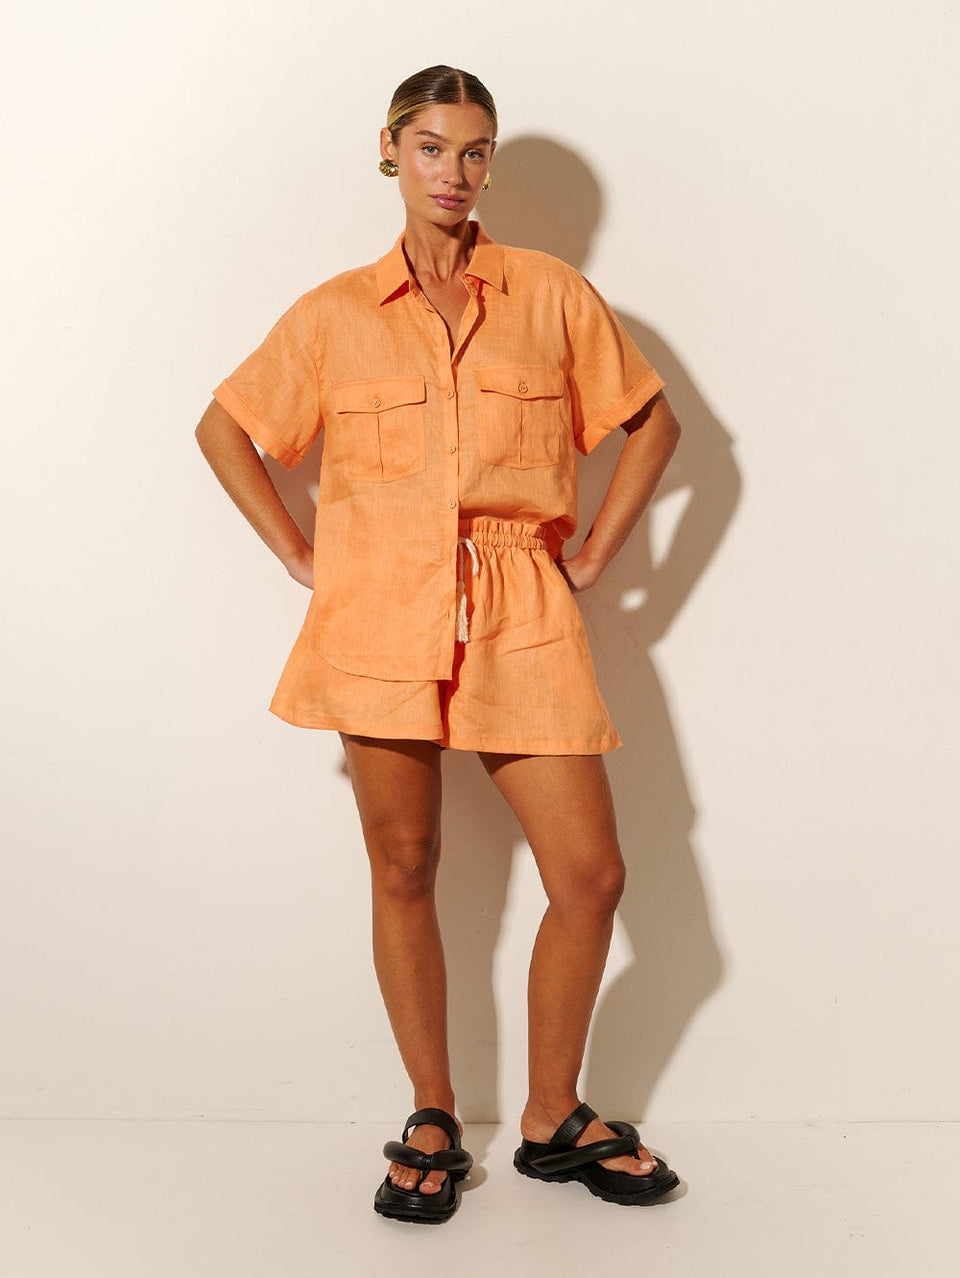 KIVARI Eve Shirt | Model wearing Orange Shirt